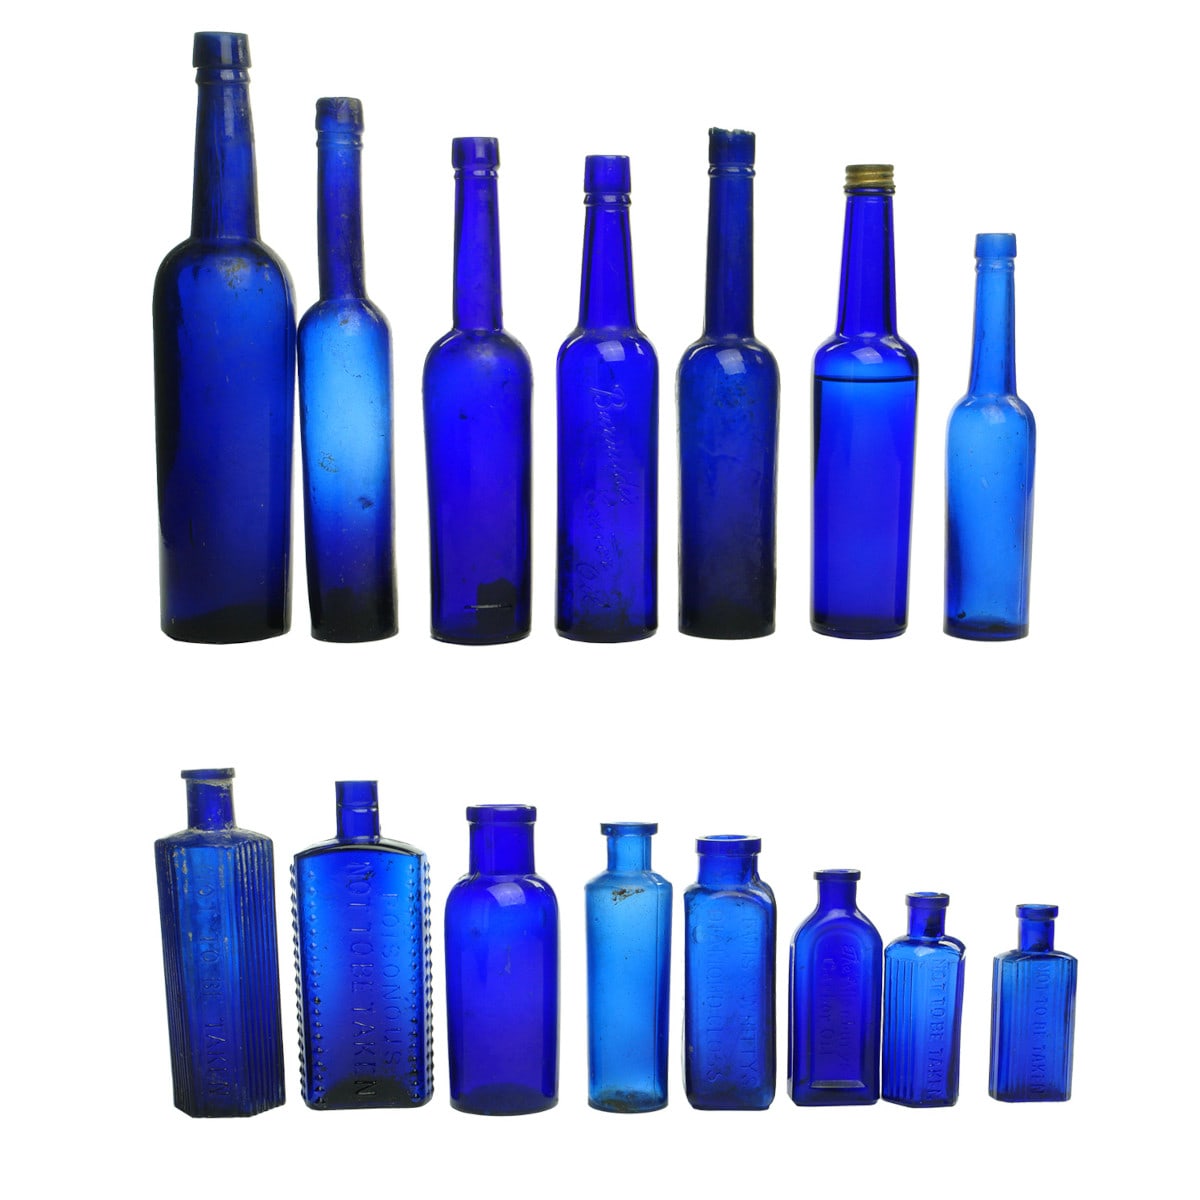 15 Cobalt Blue Bottles: Castor Oils; Allen & Hanbury's; Poisons, Made in Japan; Lewis & Whitty's; Plain Jars.